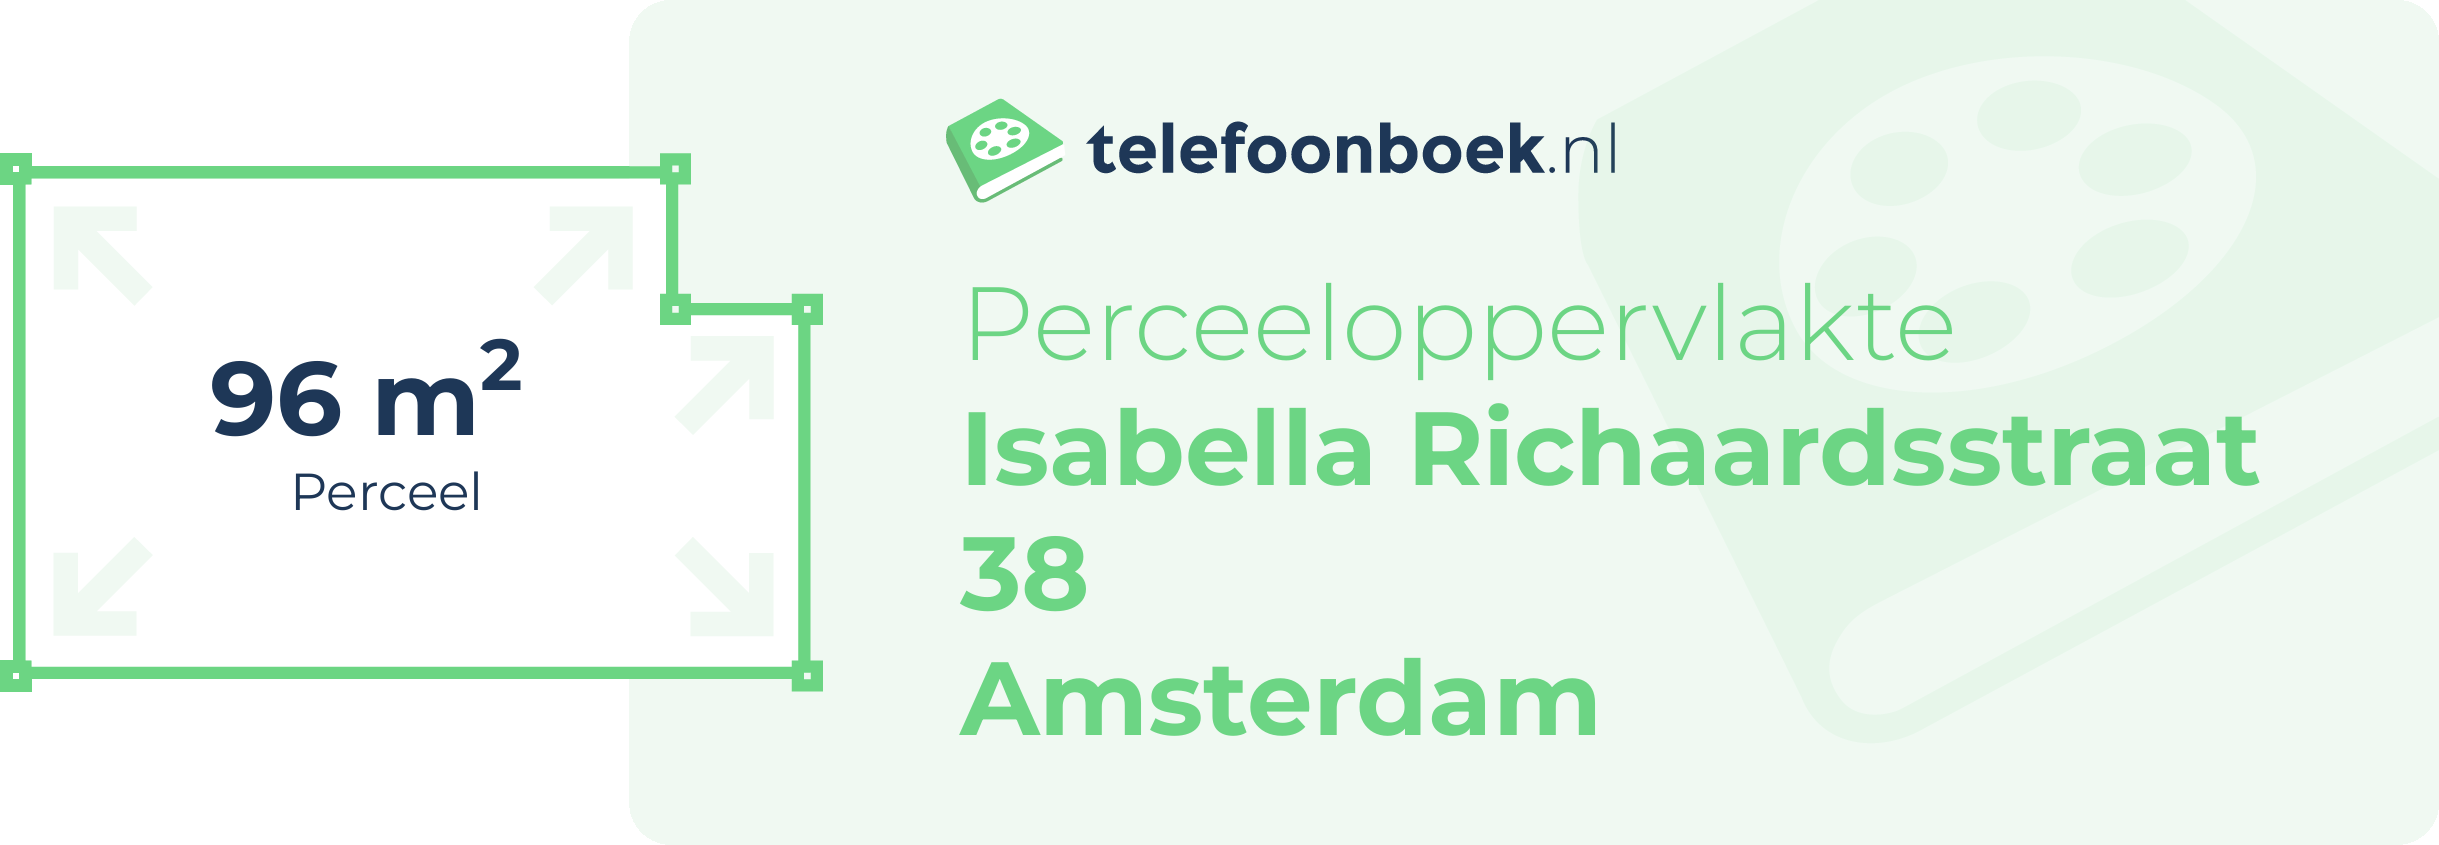 Perceeloppervlakte Isabella Richaardsstraat 38 Amsterdam